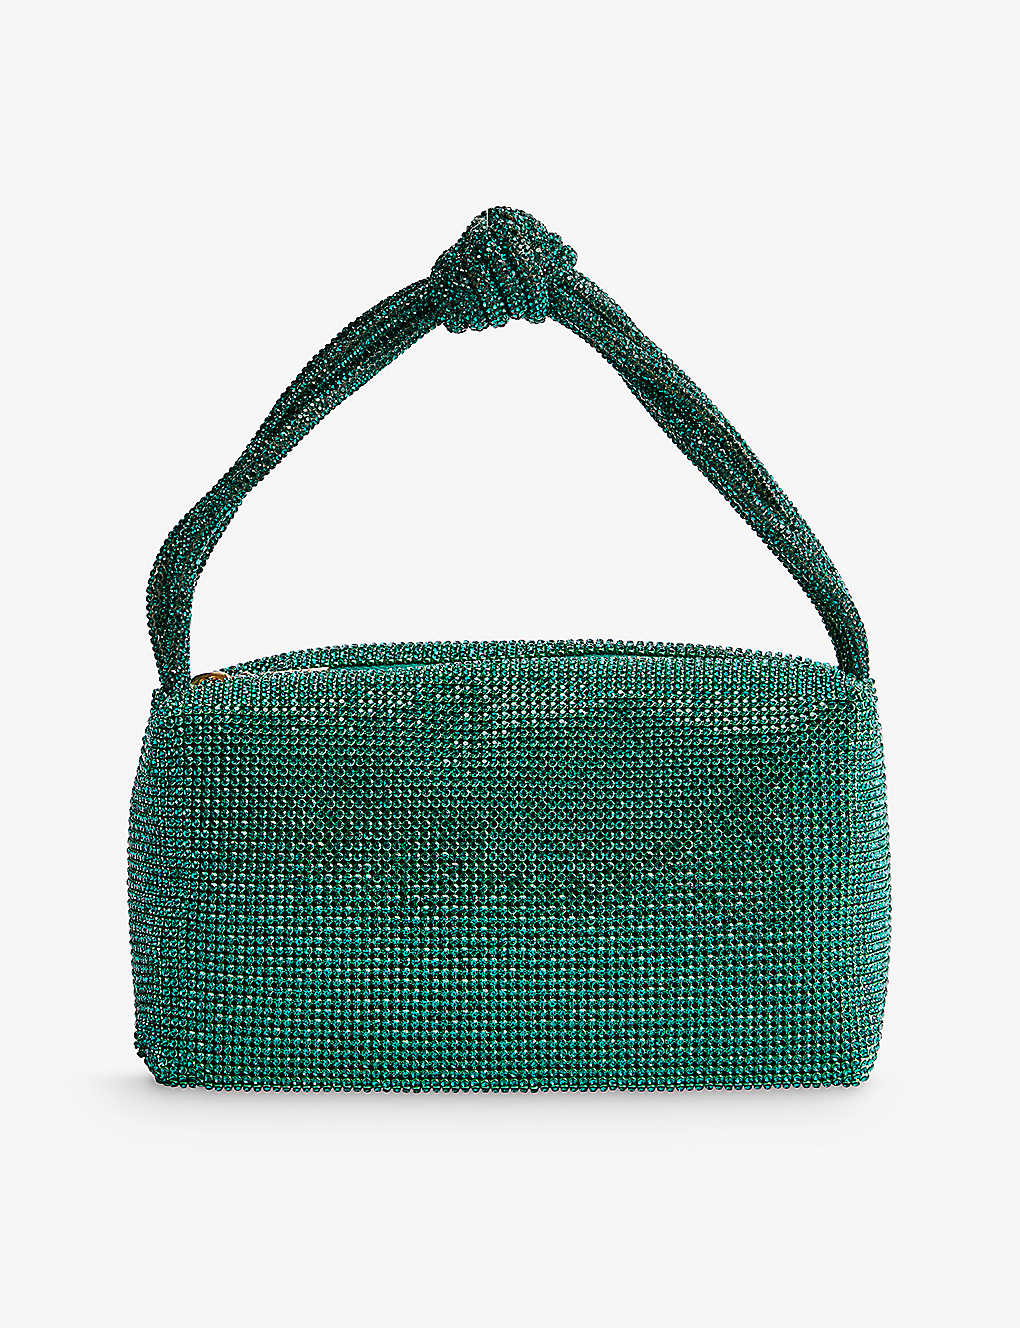 Cult Gaia Paradiso Sienna Mesh Top-handle Bag